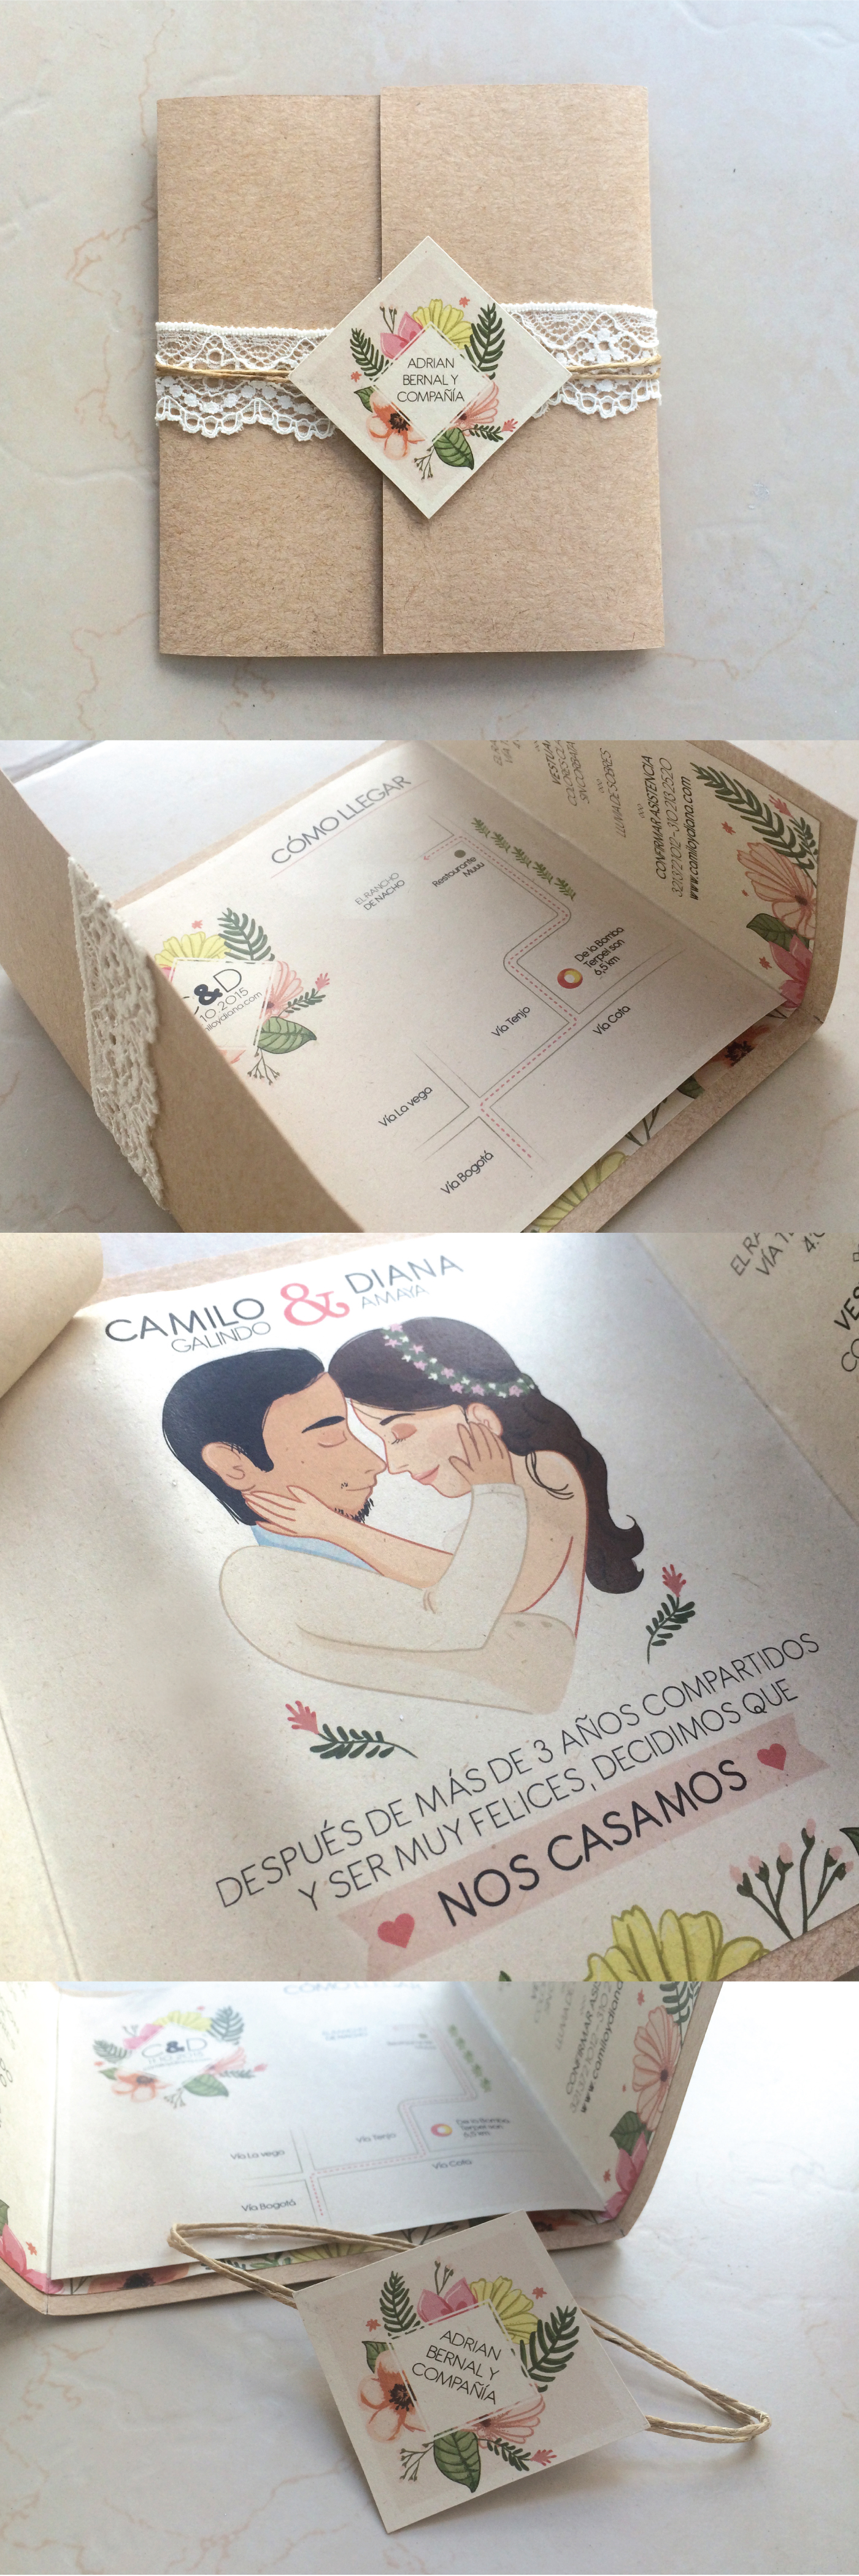 ilustracion design Character wedding matrimonio Boda invitaciones vintage invitations Love